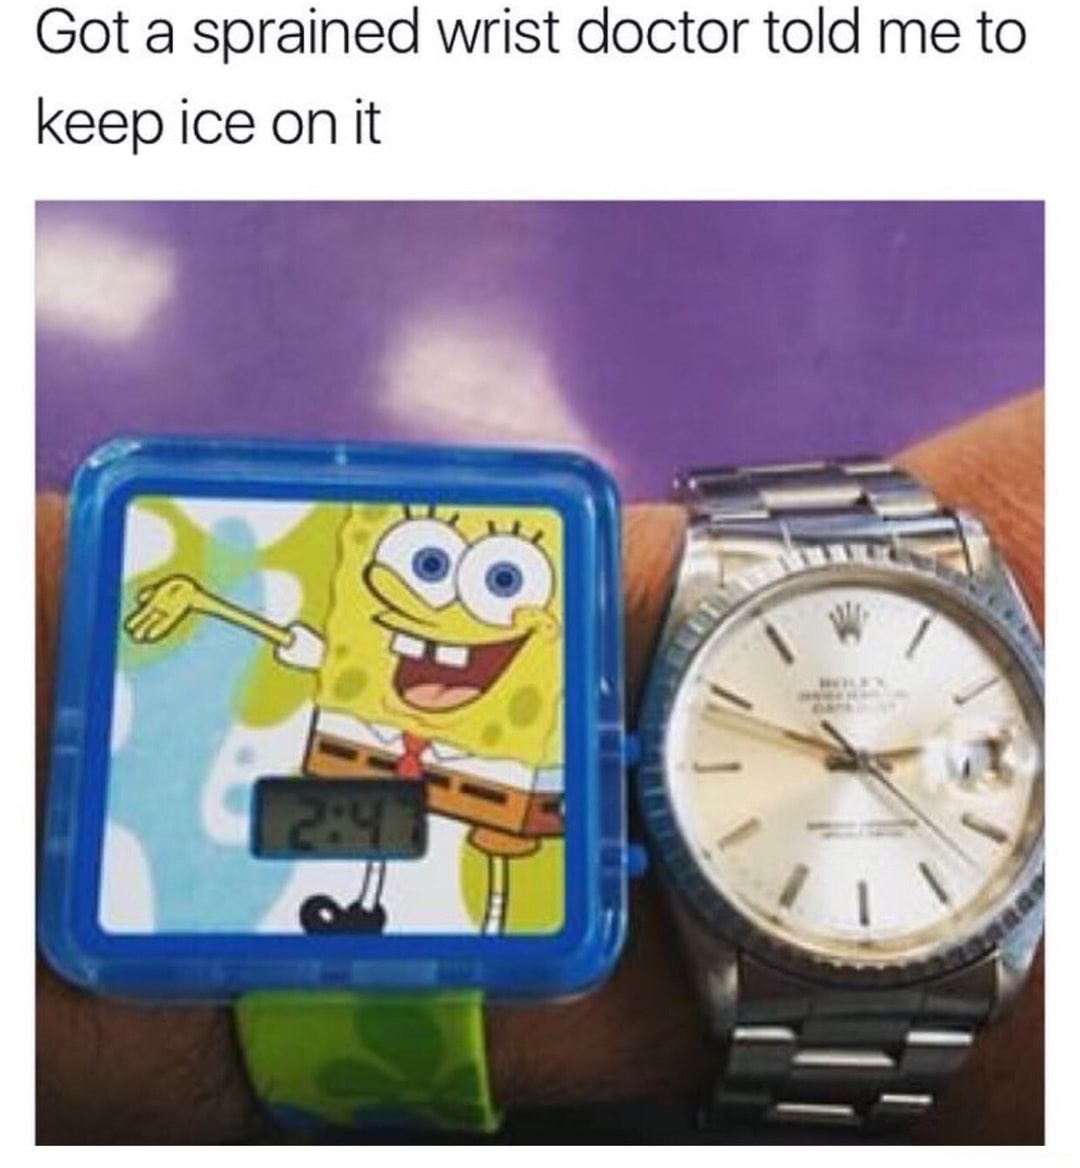 dank meme get a sprained wrist meme - Got a sprained wrist doctor told me to keep ice on it